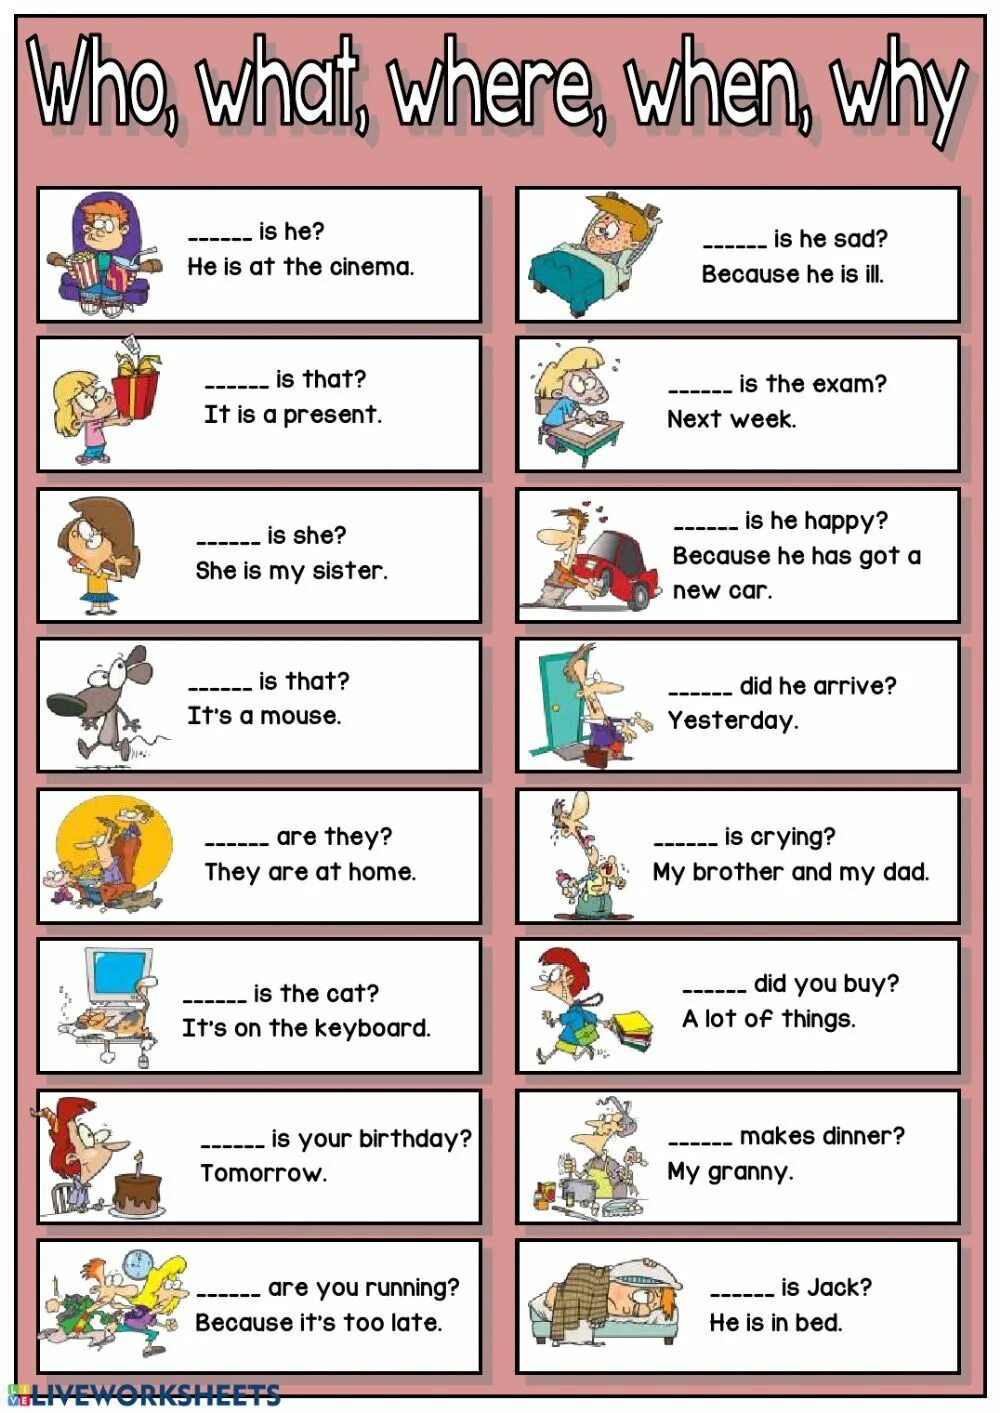 Вопросы Worksheets. WH вопросы Worksheets. Вопросы WH questions. Вопросы Worksheets for Kids. Wordwall question words for kids